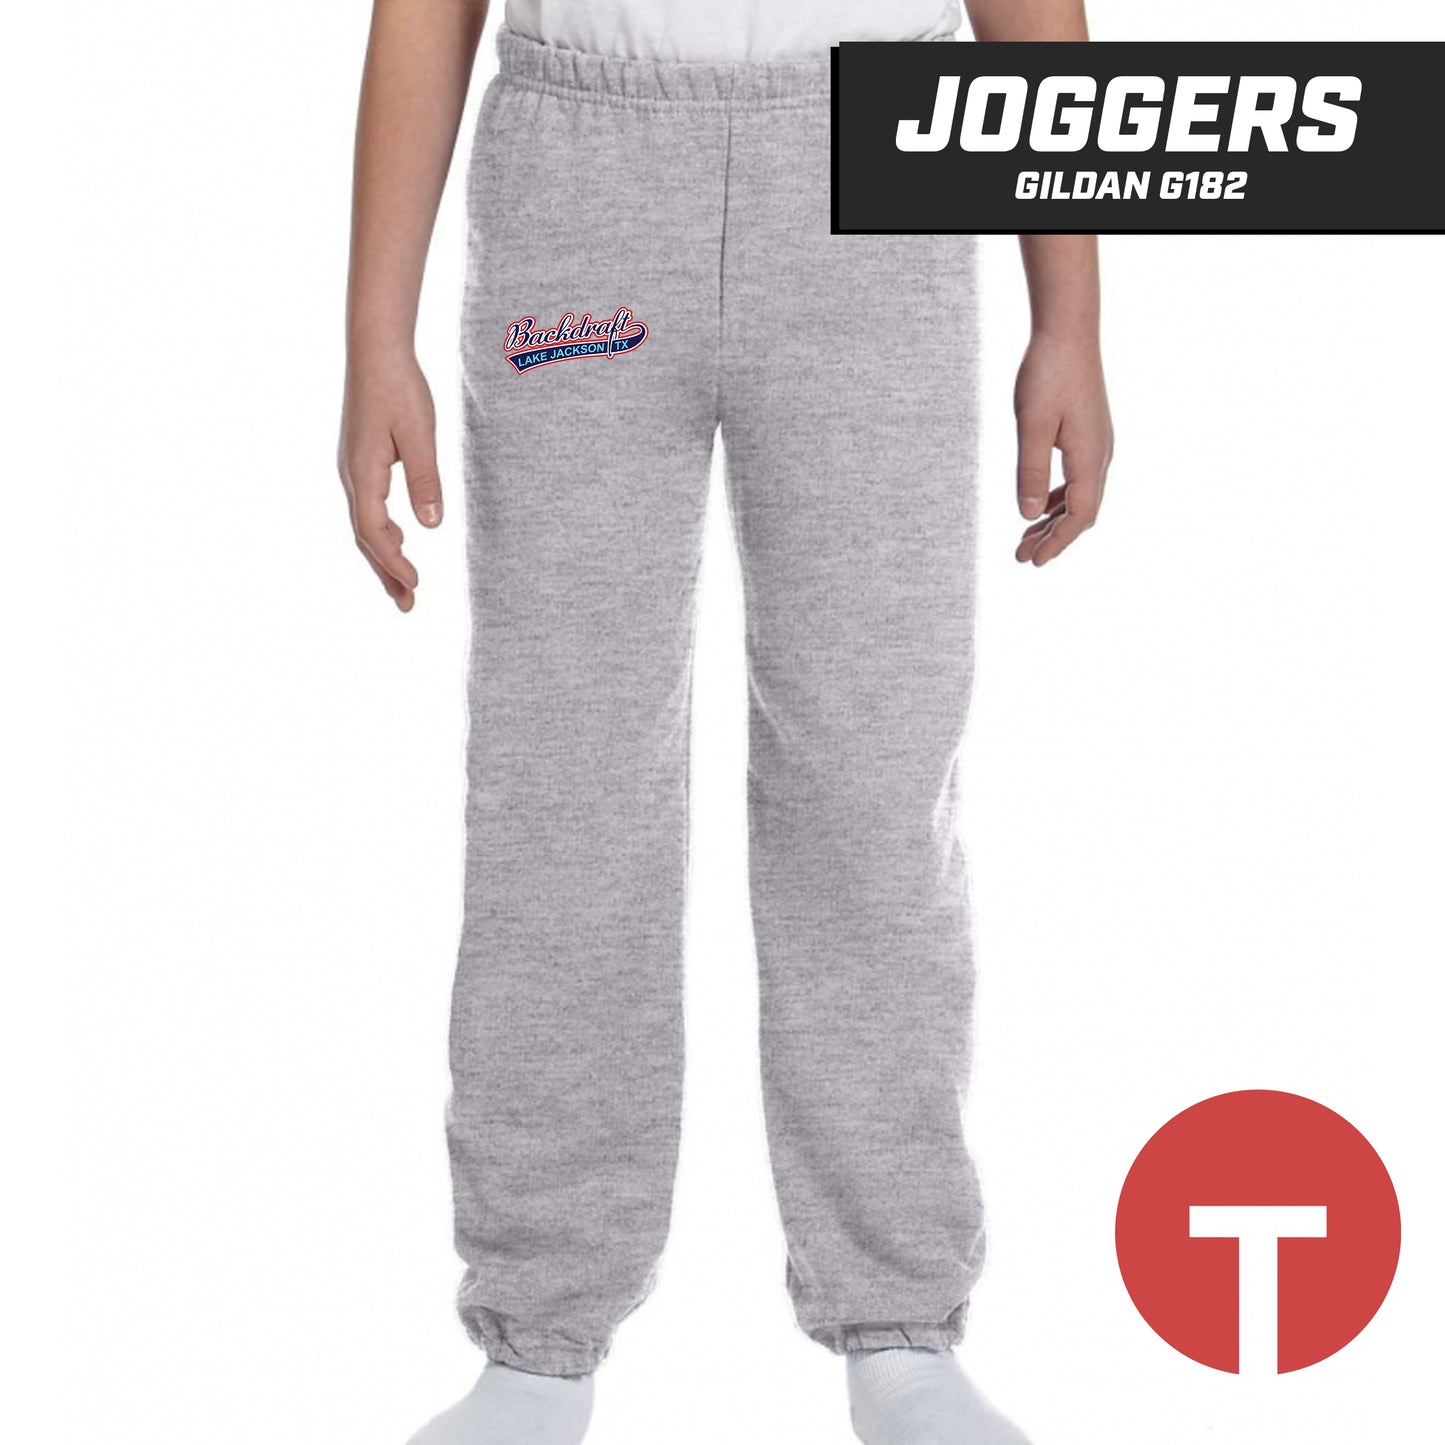 Backdraft - Jogger pants Gildan G182